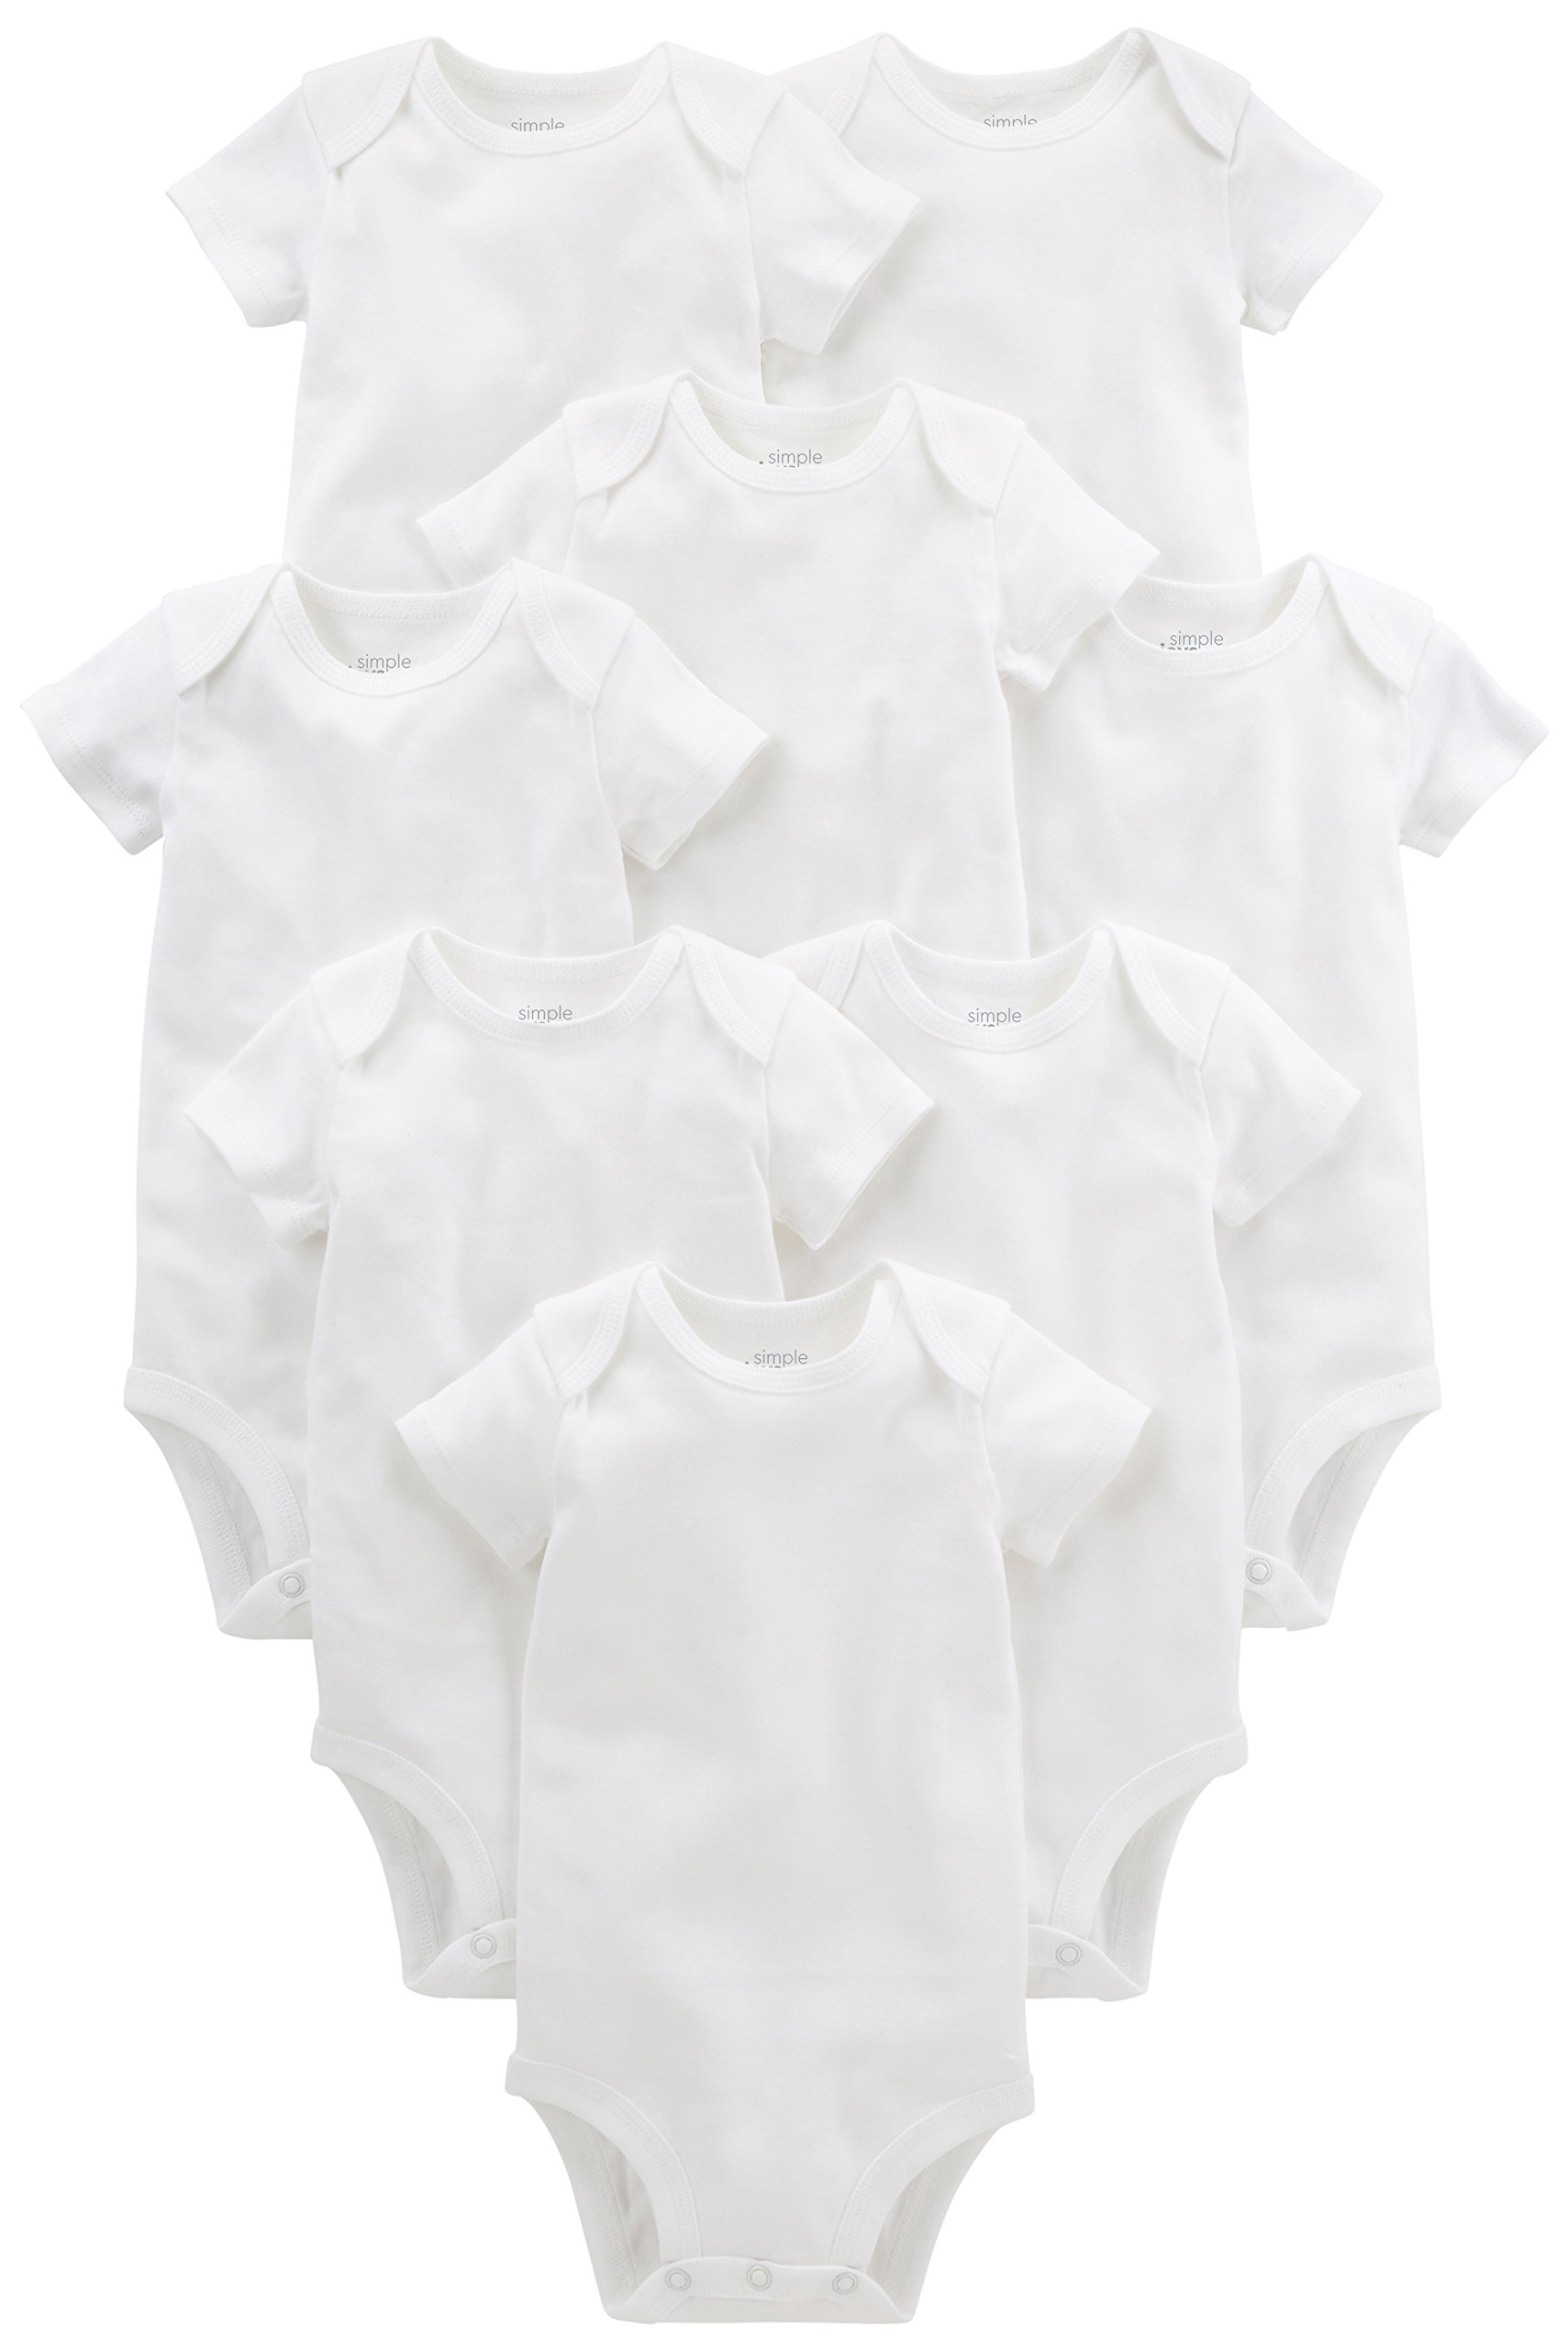 Simple Joys by Carter's Unisex Babies' Short-Sleeve Bodysuit, Pack of 8